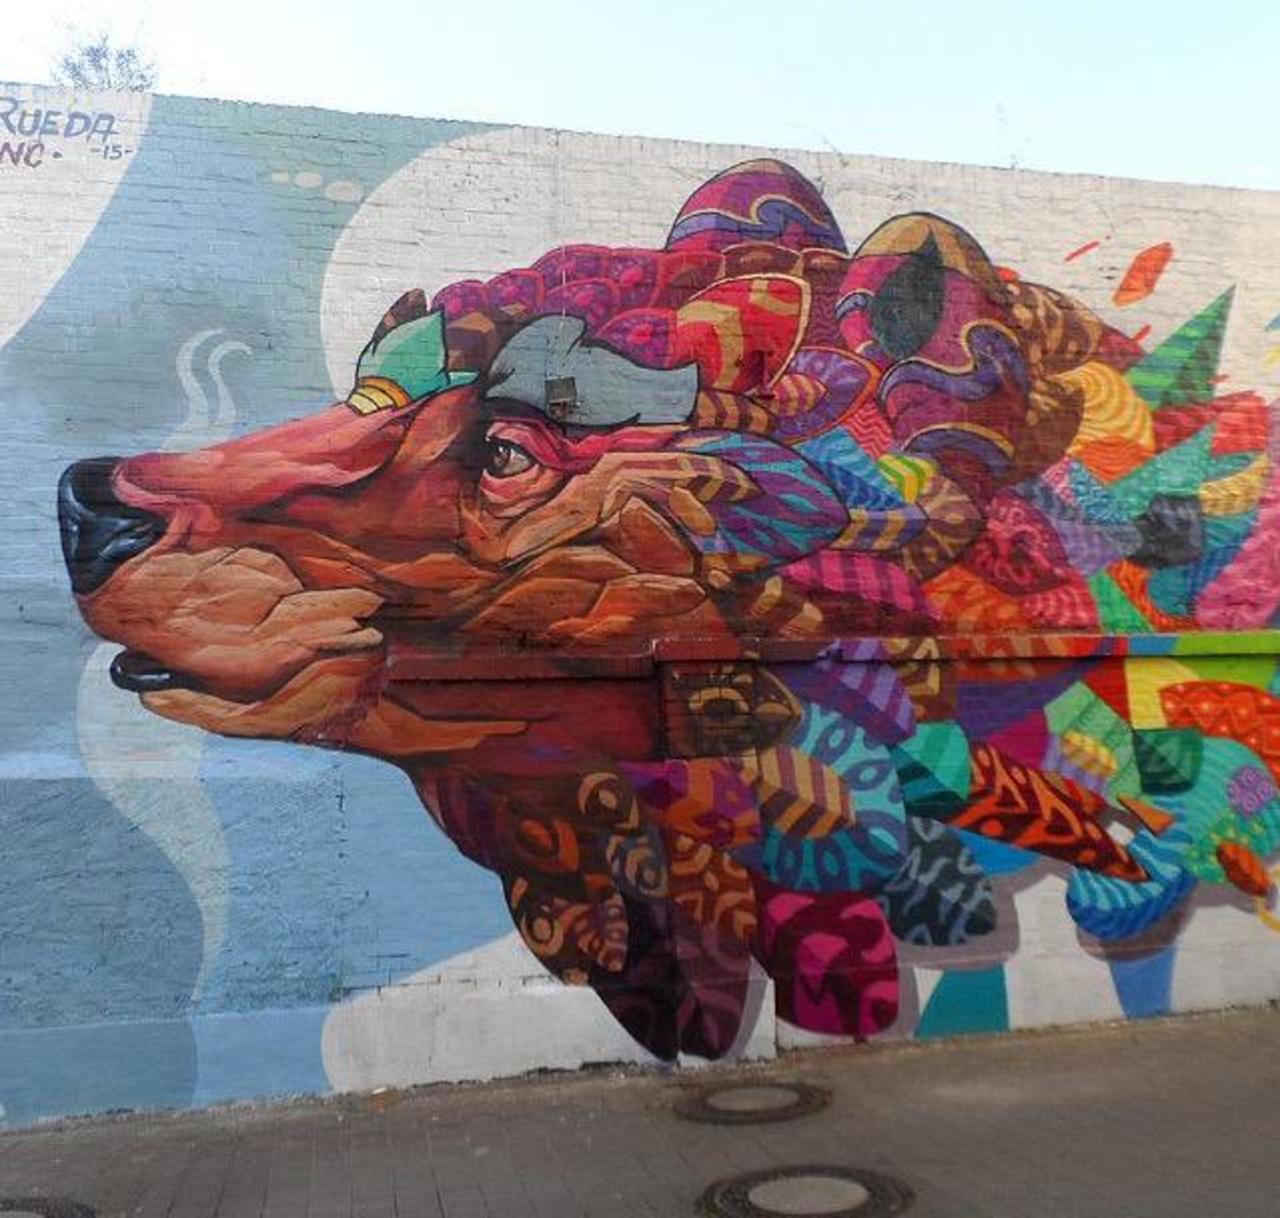 Farid Rueda Street Art 

#art #graffiti #mural #streetart http://t.co/4GKeWVoeKA